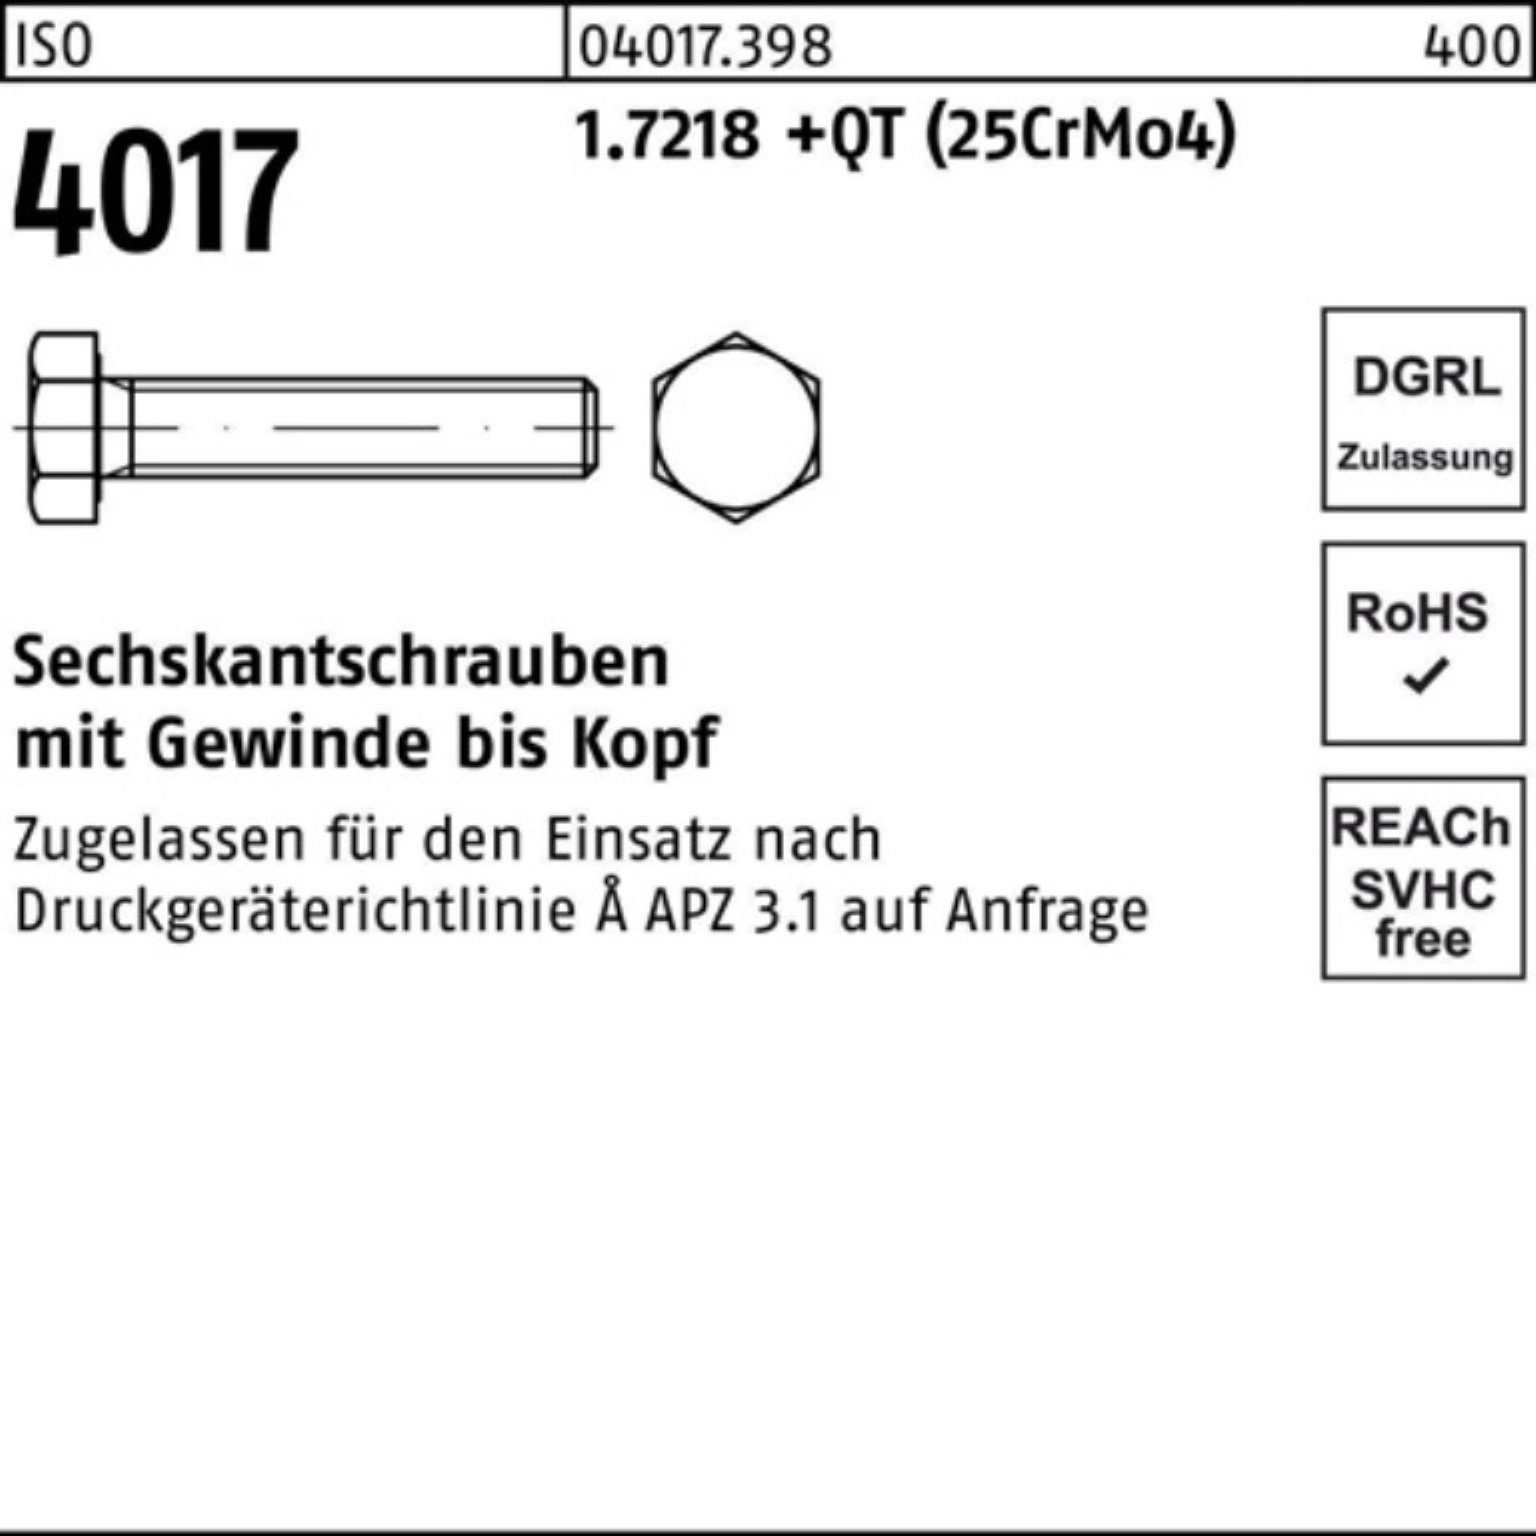 +QT M20x 4017 Bufab (25CrMo4) VG 1.7218 Sechskantschraube Sechskantschraube 80 100er ISO Pack